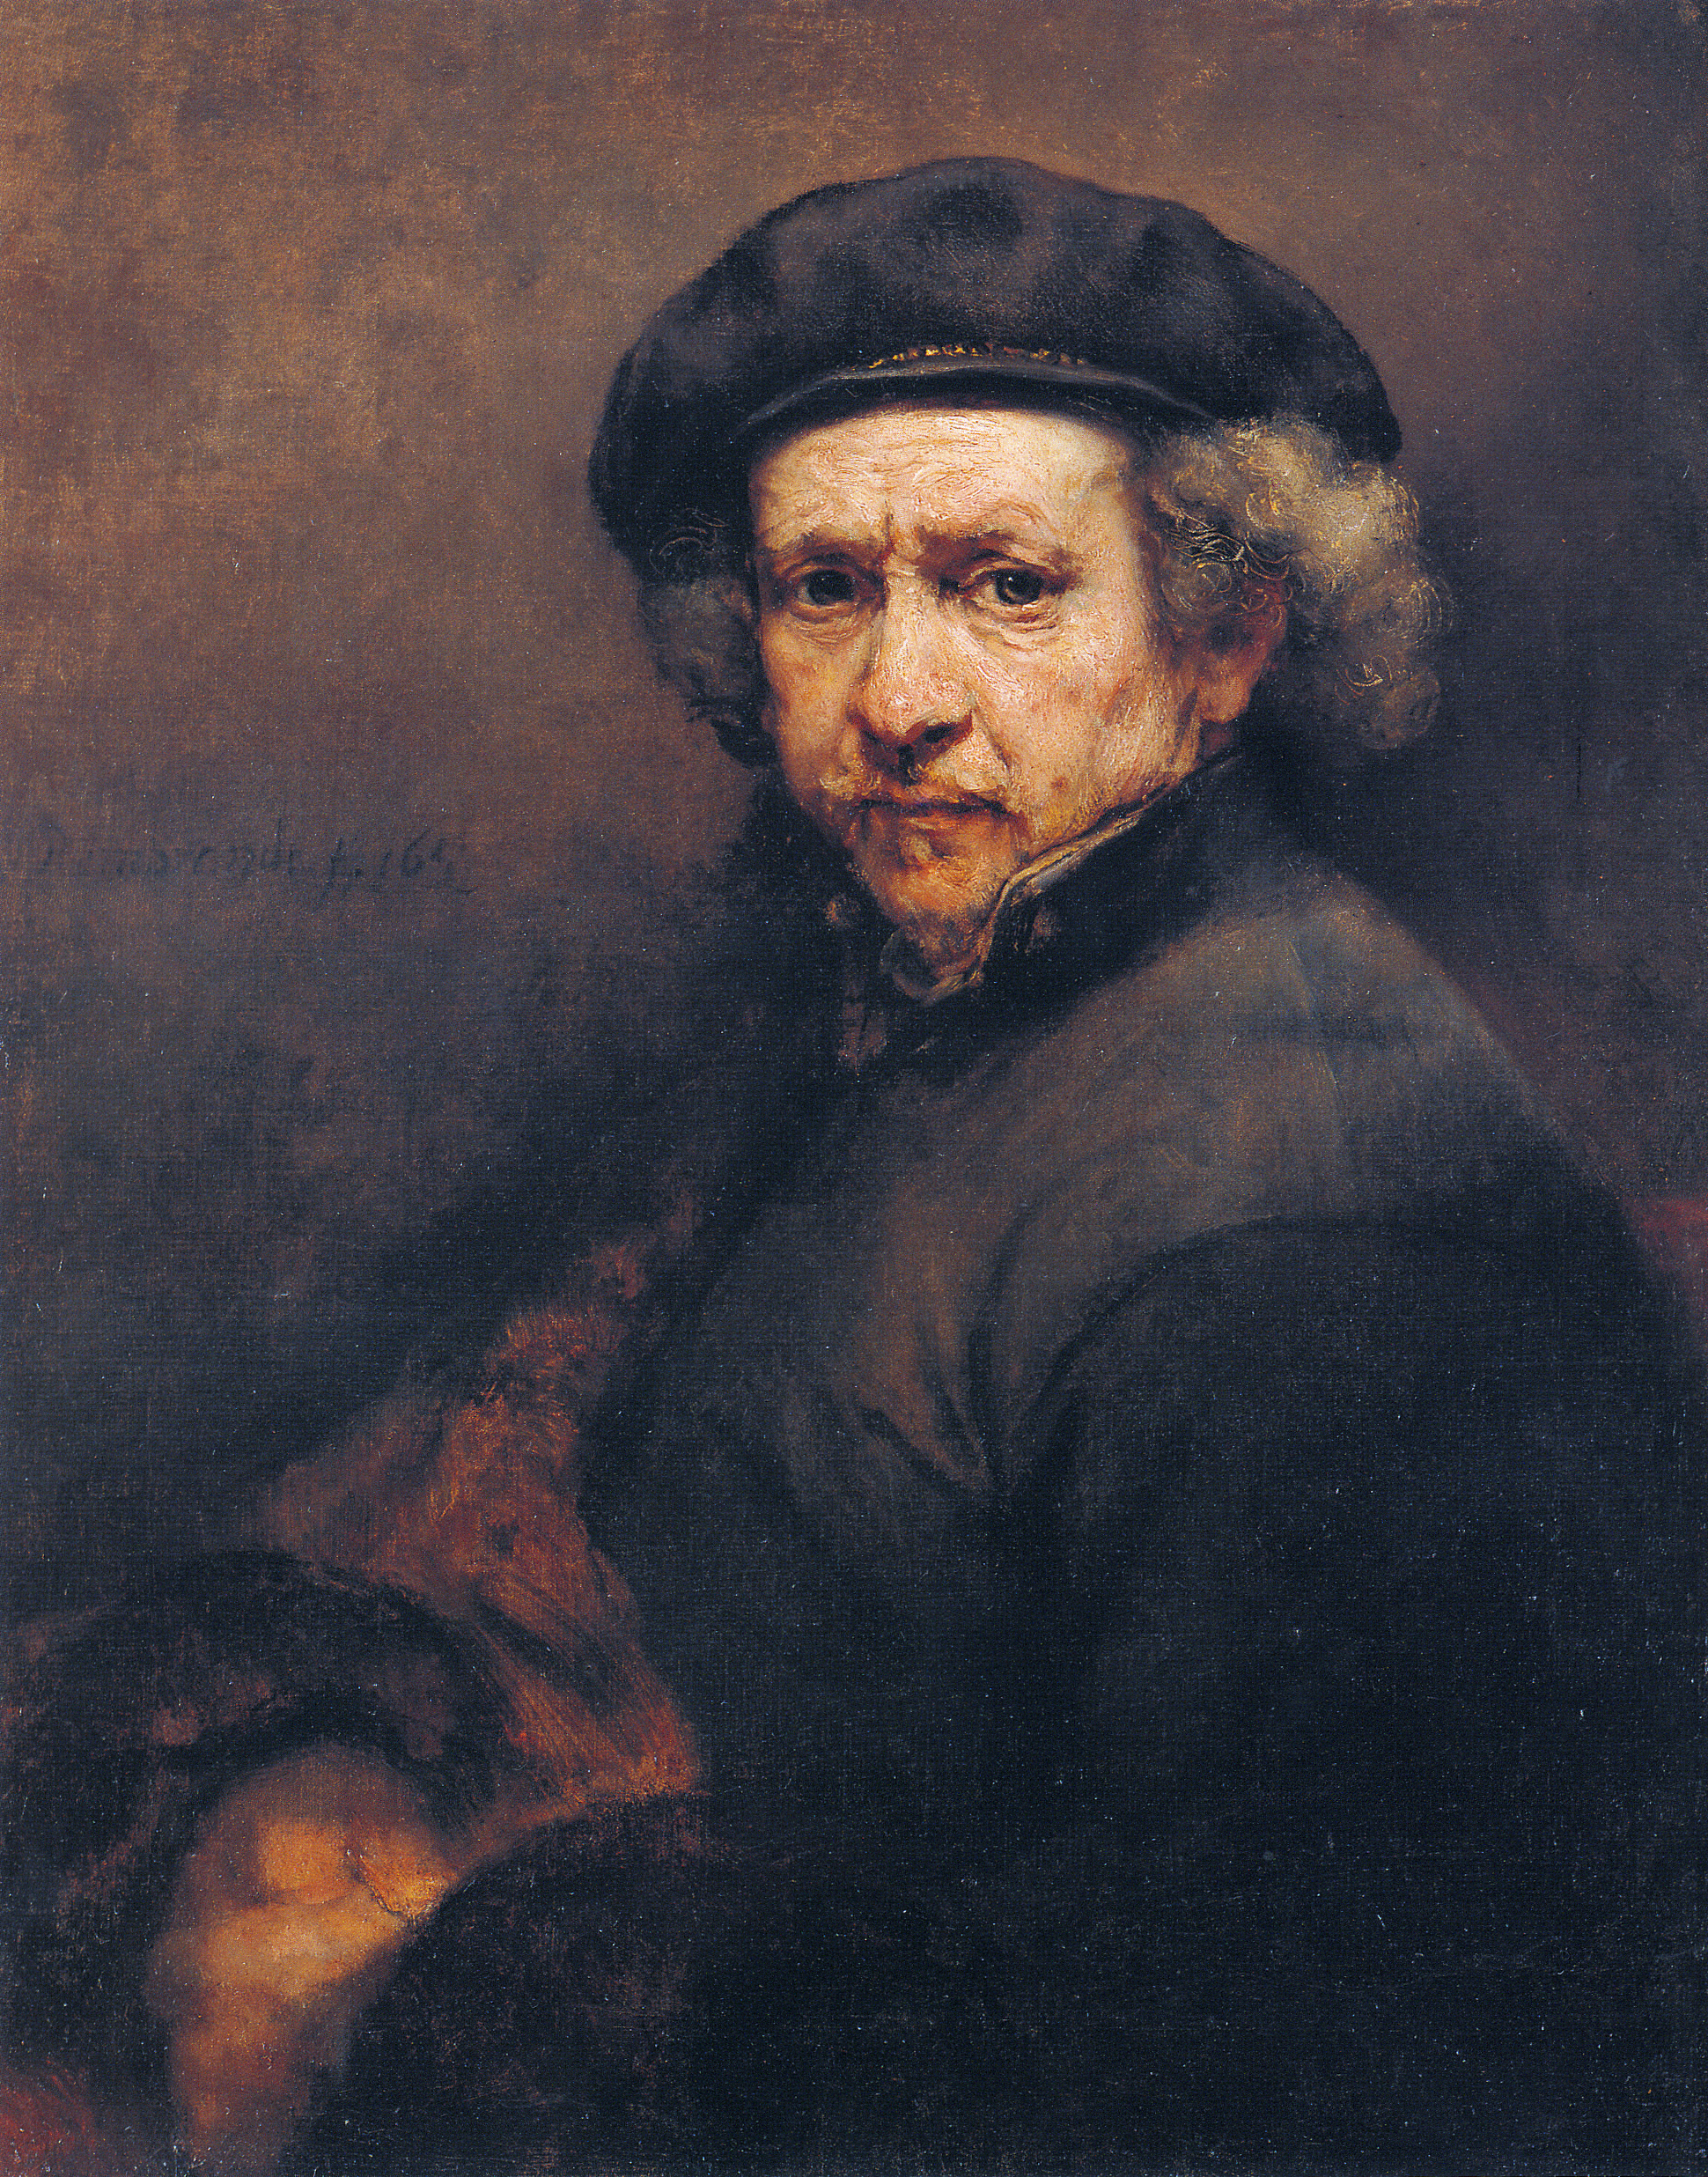 Self portrait, Rembrandt, 1659, National Gallery of Art, Washingtion, USA
                              (http://upload.wikimedia.org/wikipedia/commons/1/18/Rembrandt_self_portrait.jpg)